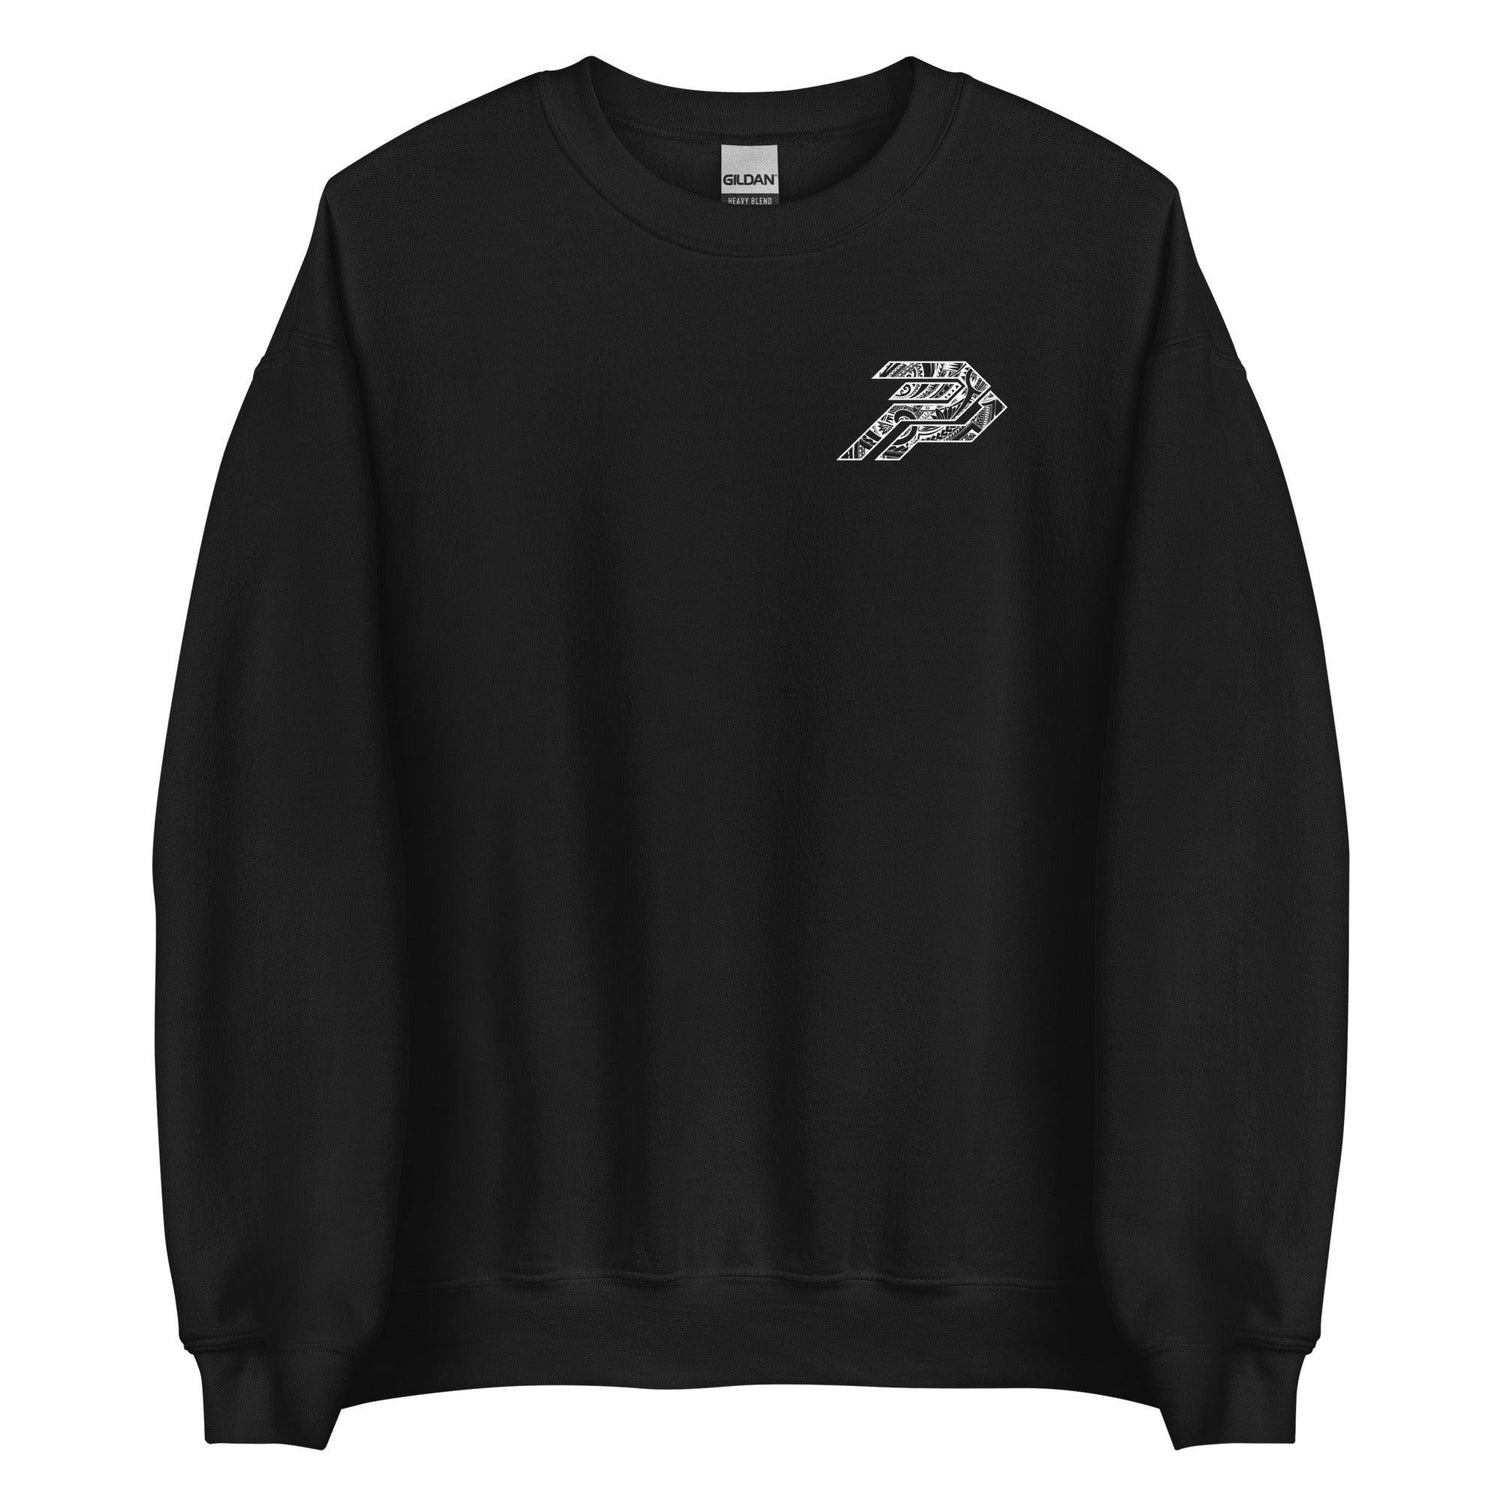 Phill Paea "Homegrown" Sweatshirt - Fan Arch